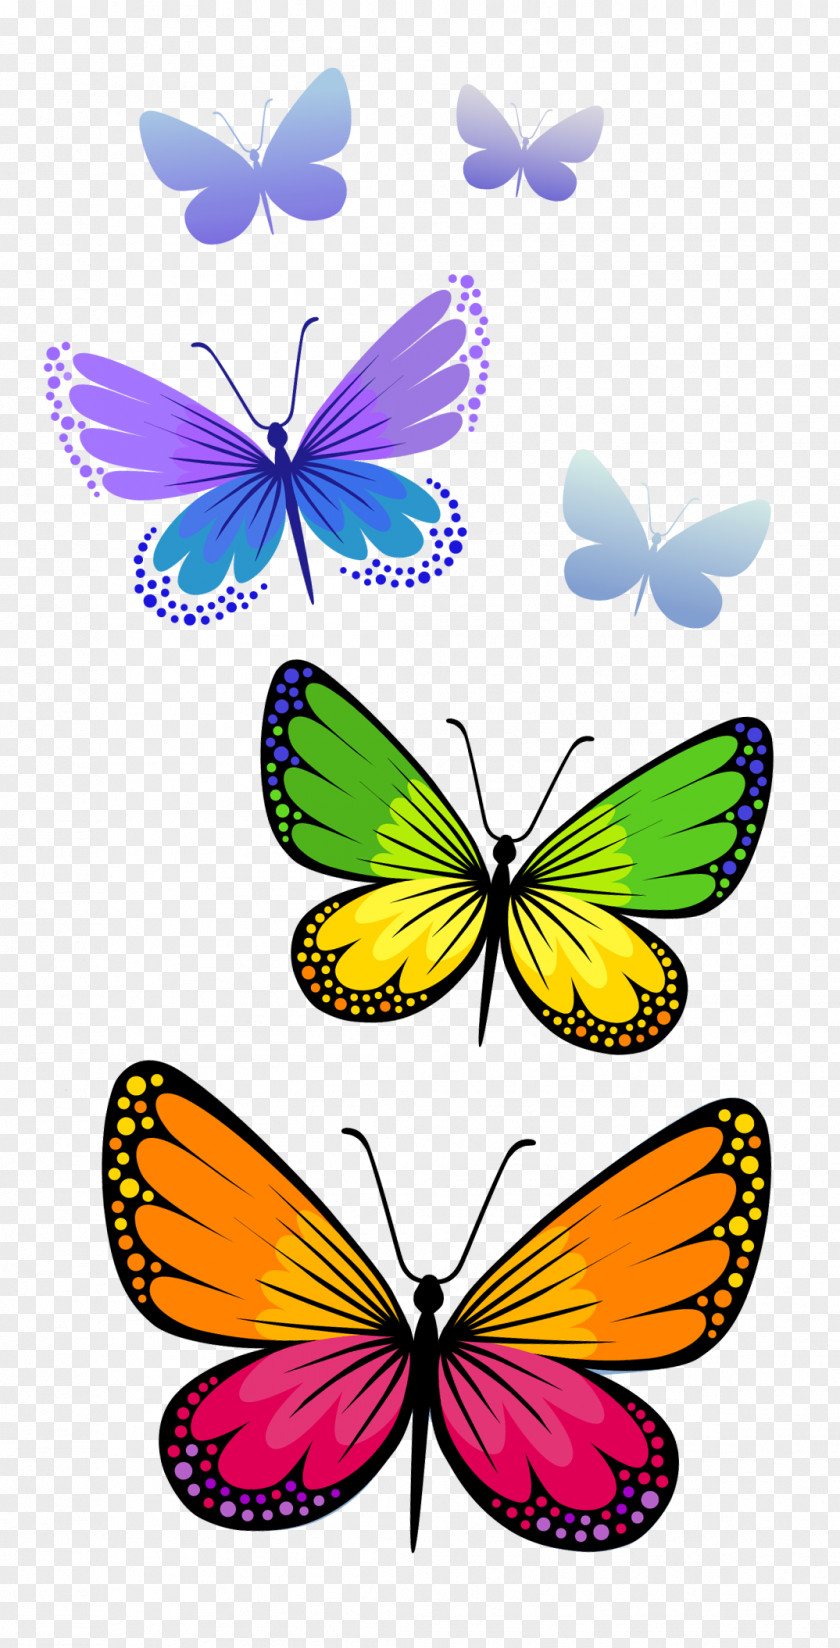 Butterflies Composition Clipart Image Butterfly Clip Art PNG